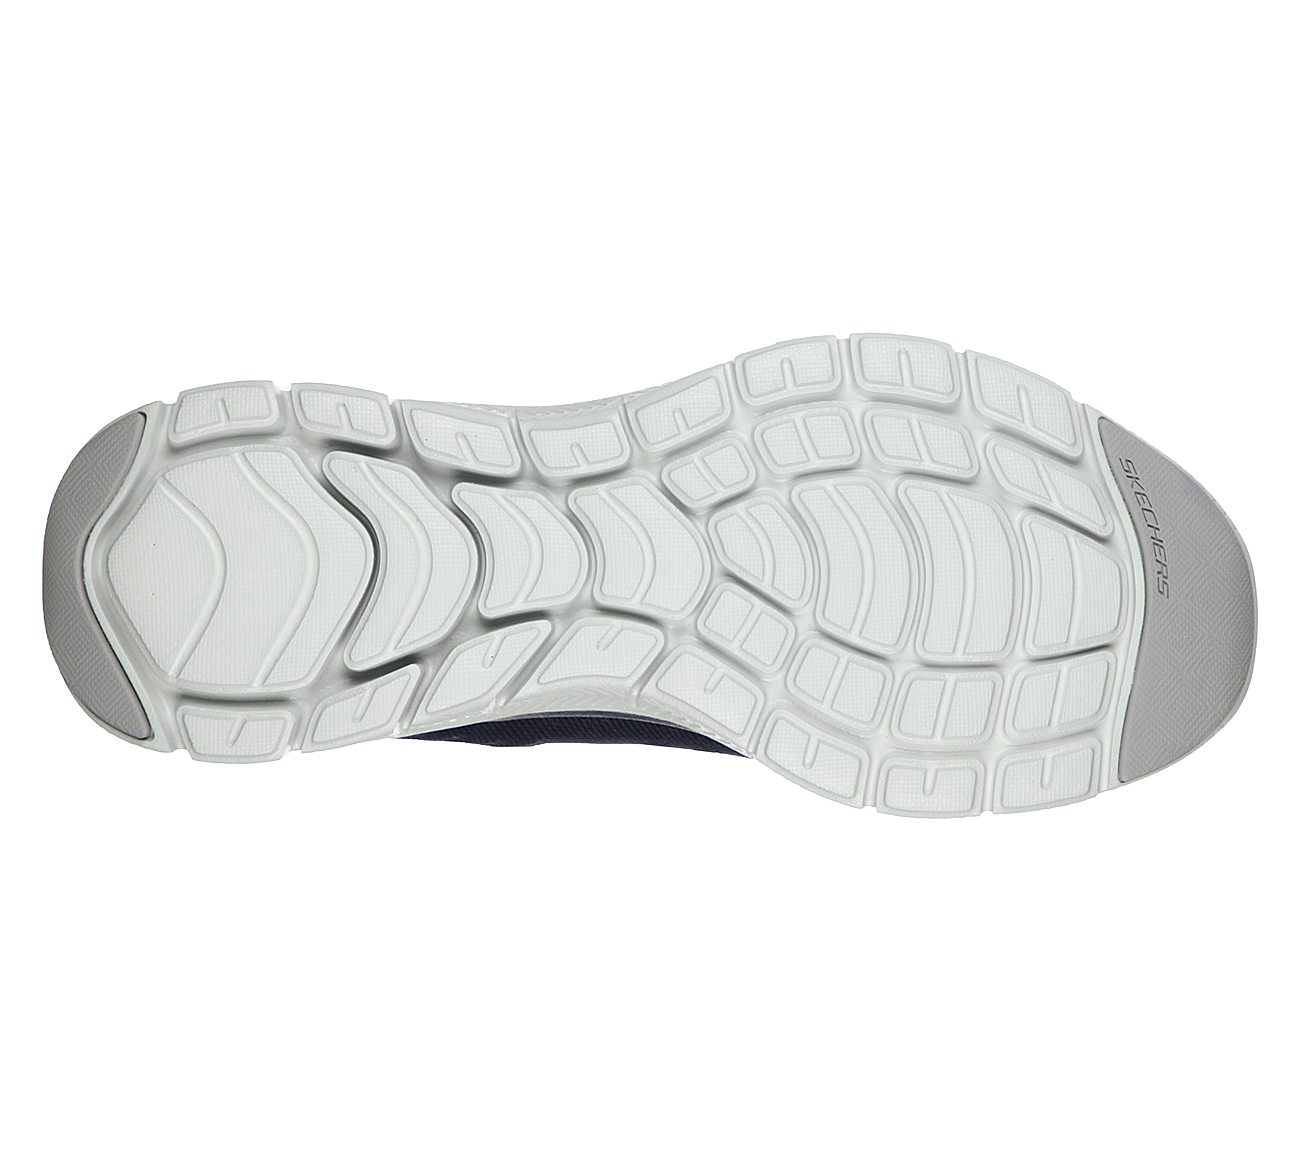 FLEX ADVANTAGE 4.0 - OVERTAKE, NAVY/CHARCOAL Footwear Bottom View